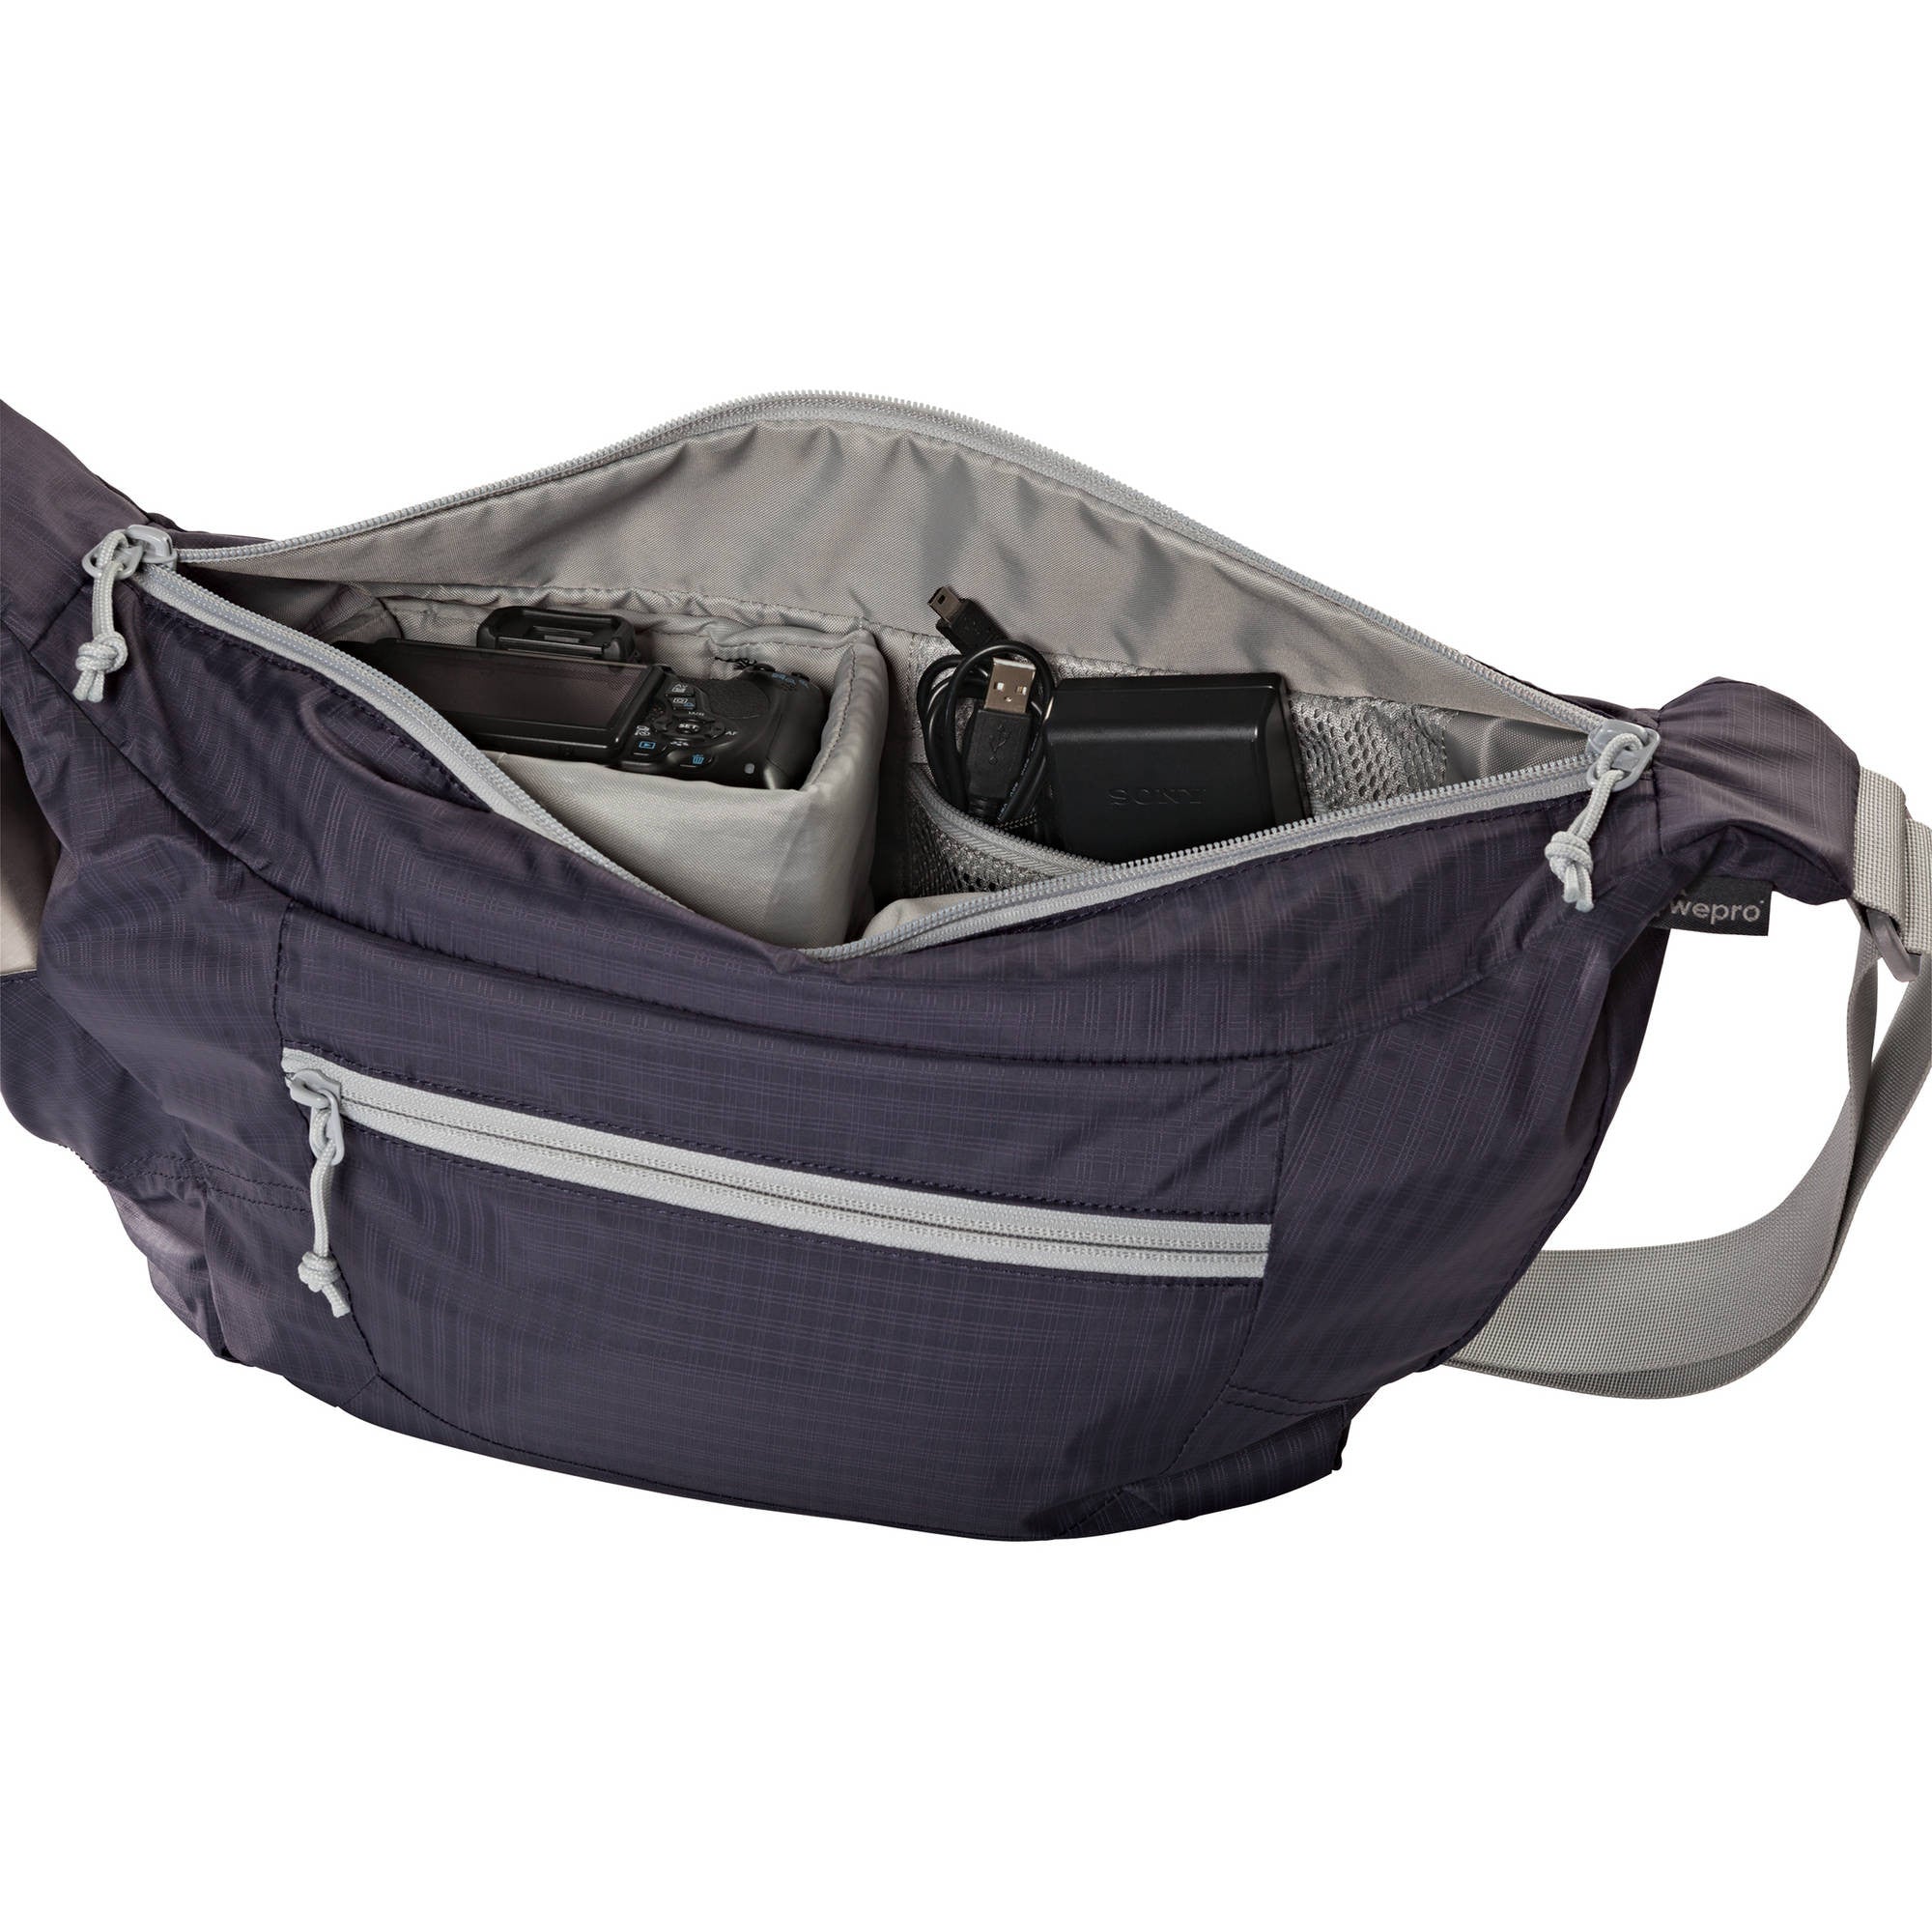 Lowepro Photo Sport Shoulder 12L Camera Bag (Purple/Grey), bags shoulder bags, Lowepro - Pictureline  - 9